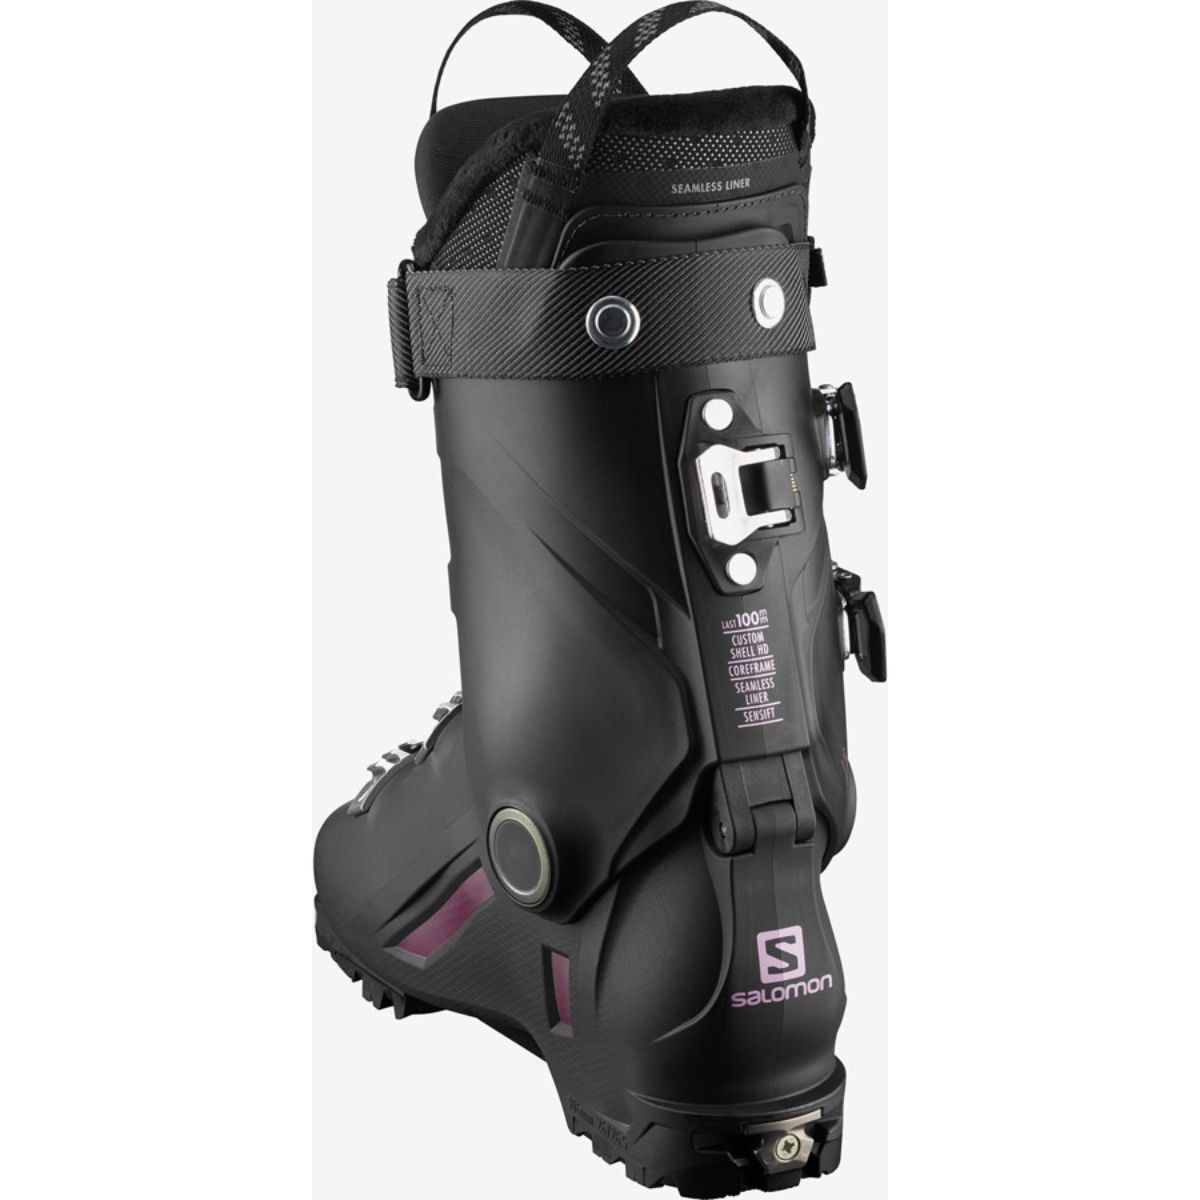 RRP £81.00 Salomon Snow Monkey Shoes Women's Winter/ Ski/ Hiking Boots Size 4.0